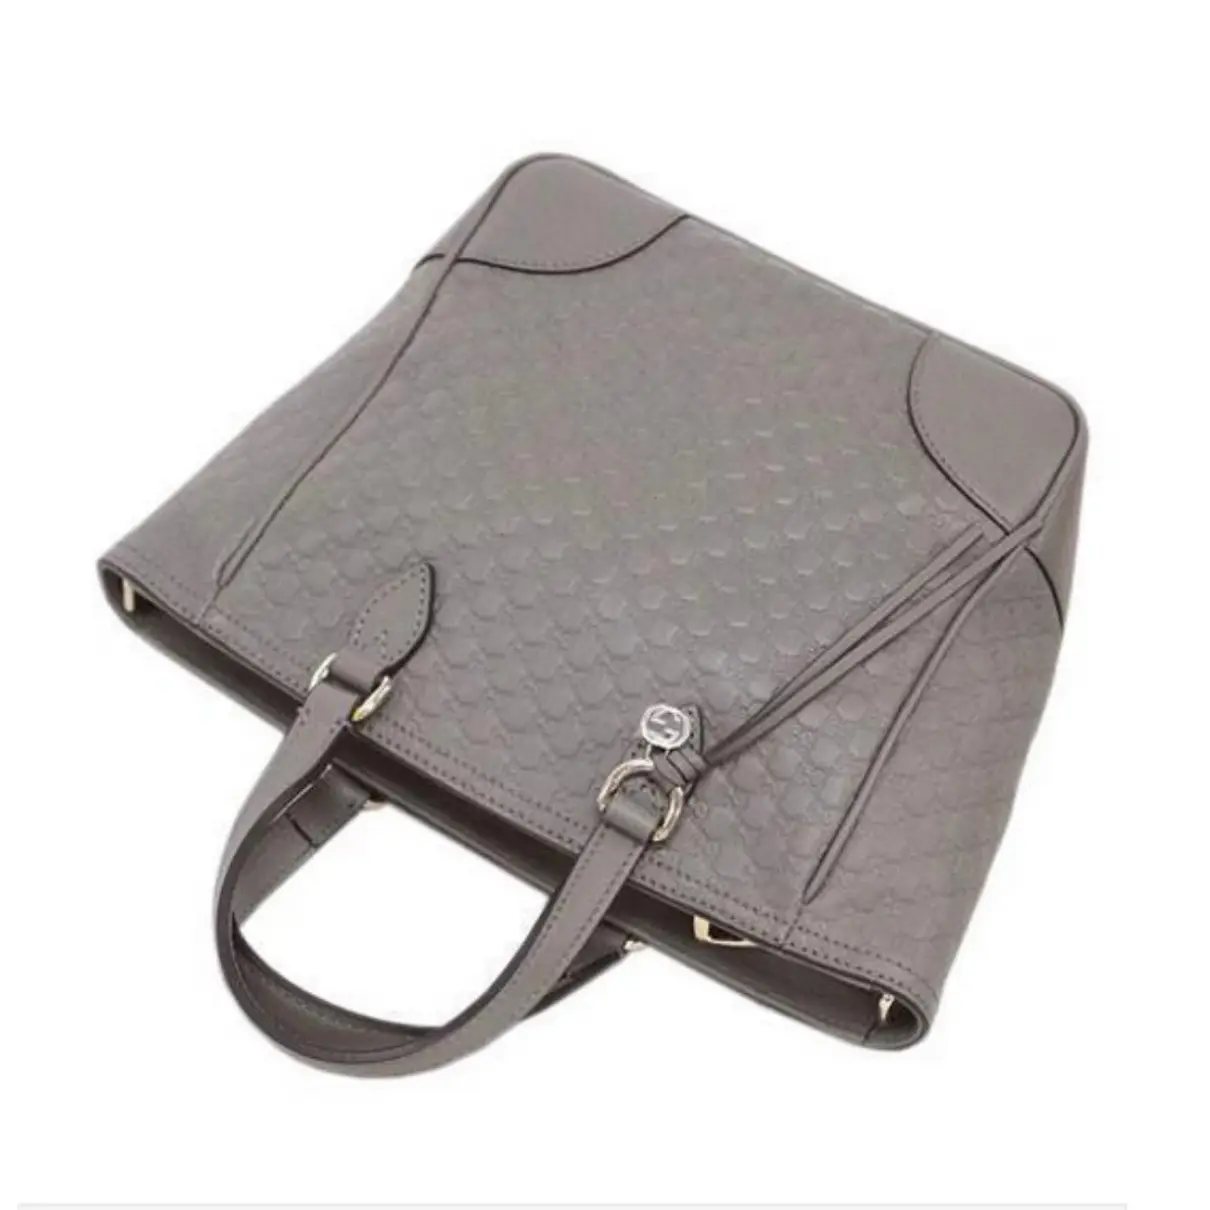 Buy Gucci Bree leather handbag online